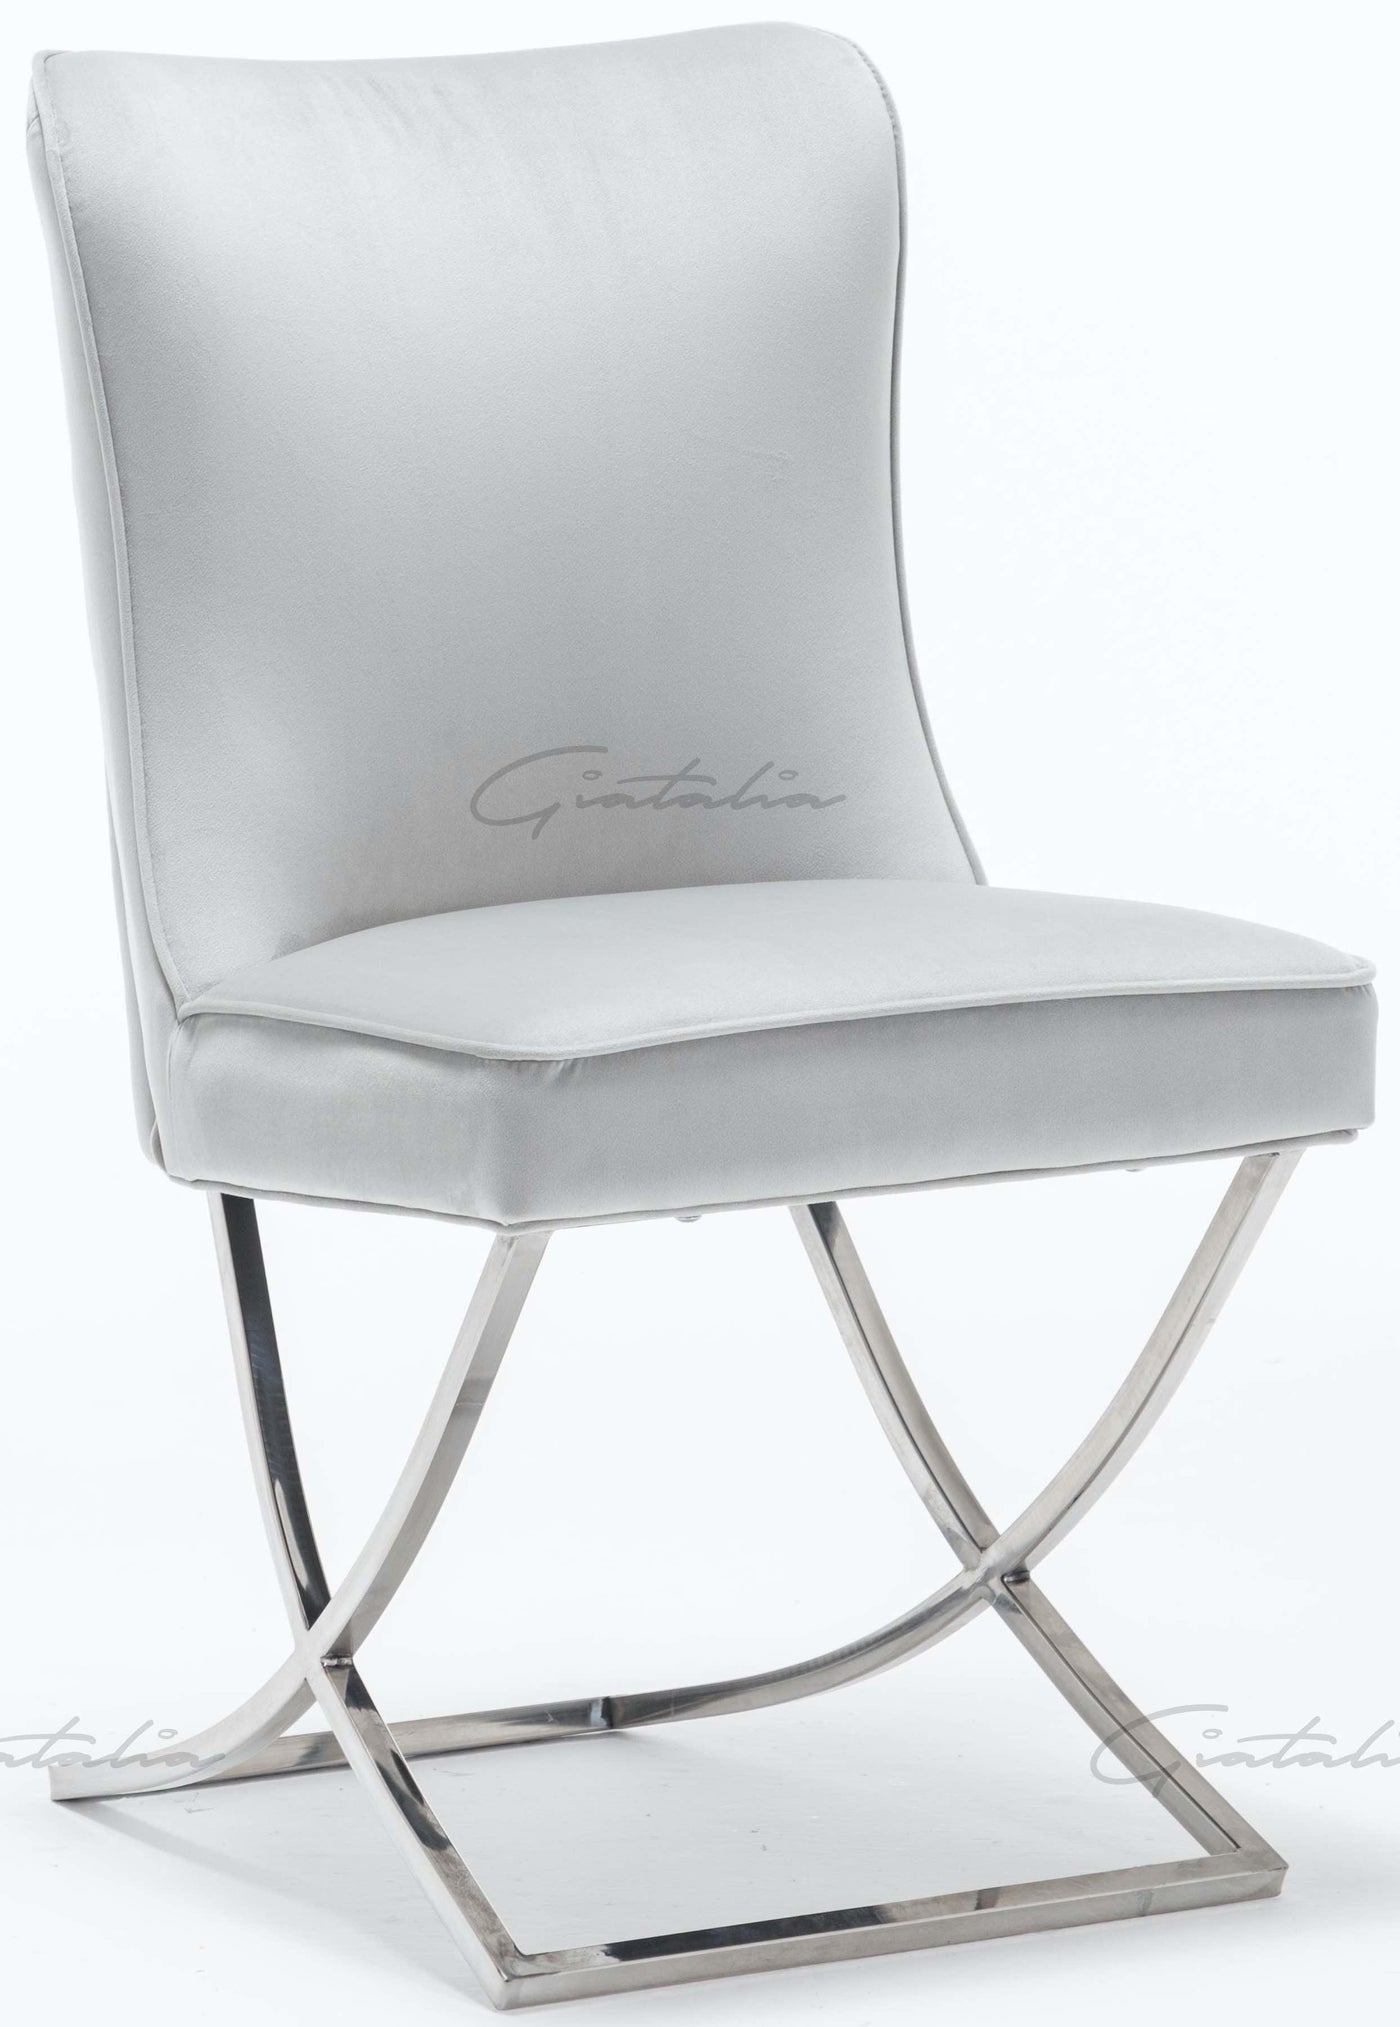 Louis 120cm Grey Marble Dining Table + Belgravia Dark Grey Plush Velvet Button Dining Chairs-Esme Furnishings